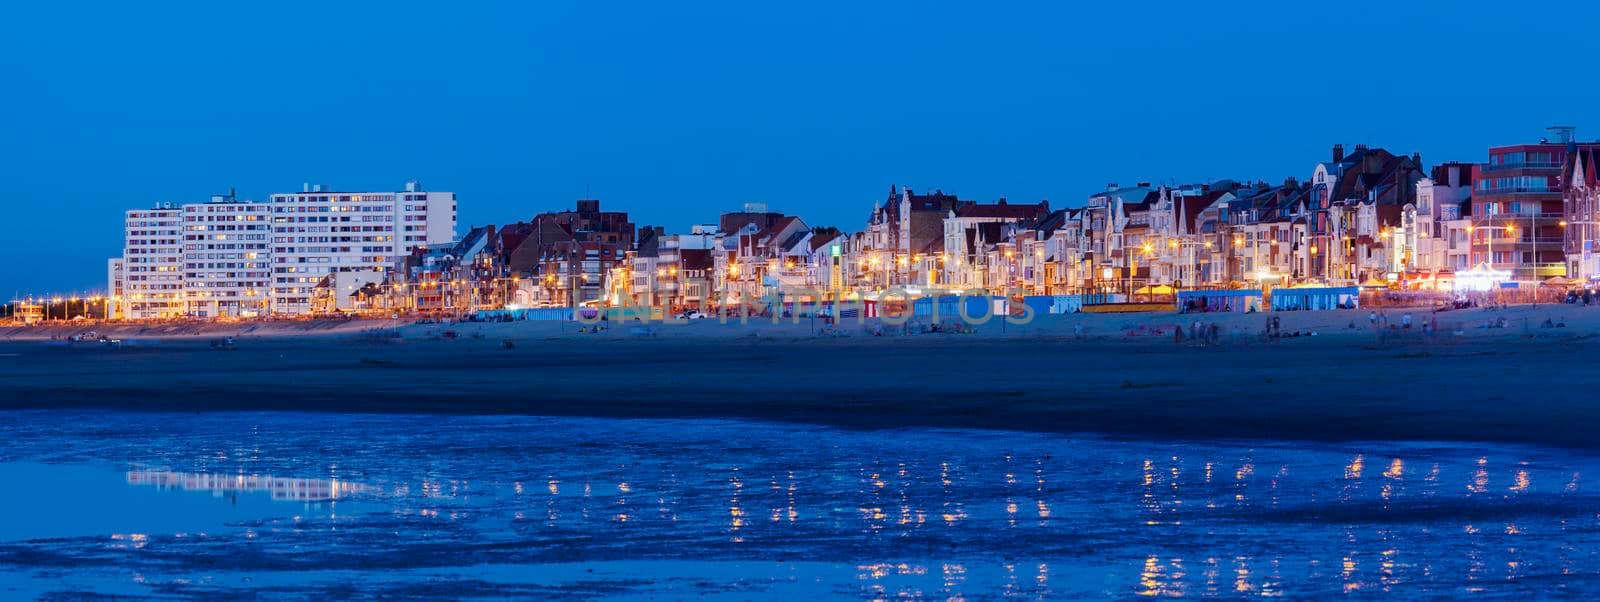 Panorama of Dunkirk   by benkrut